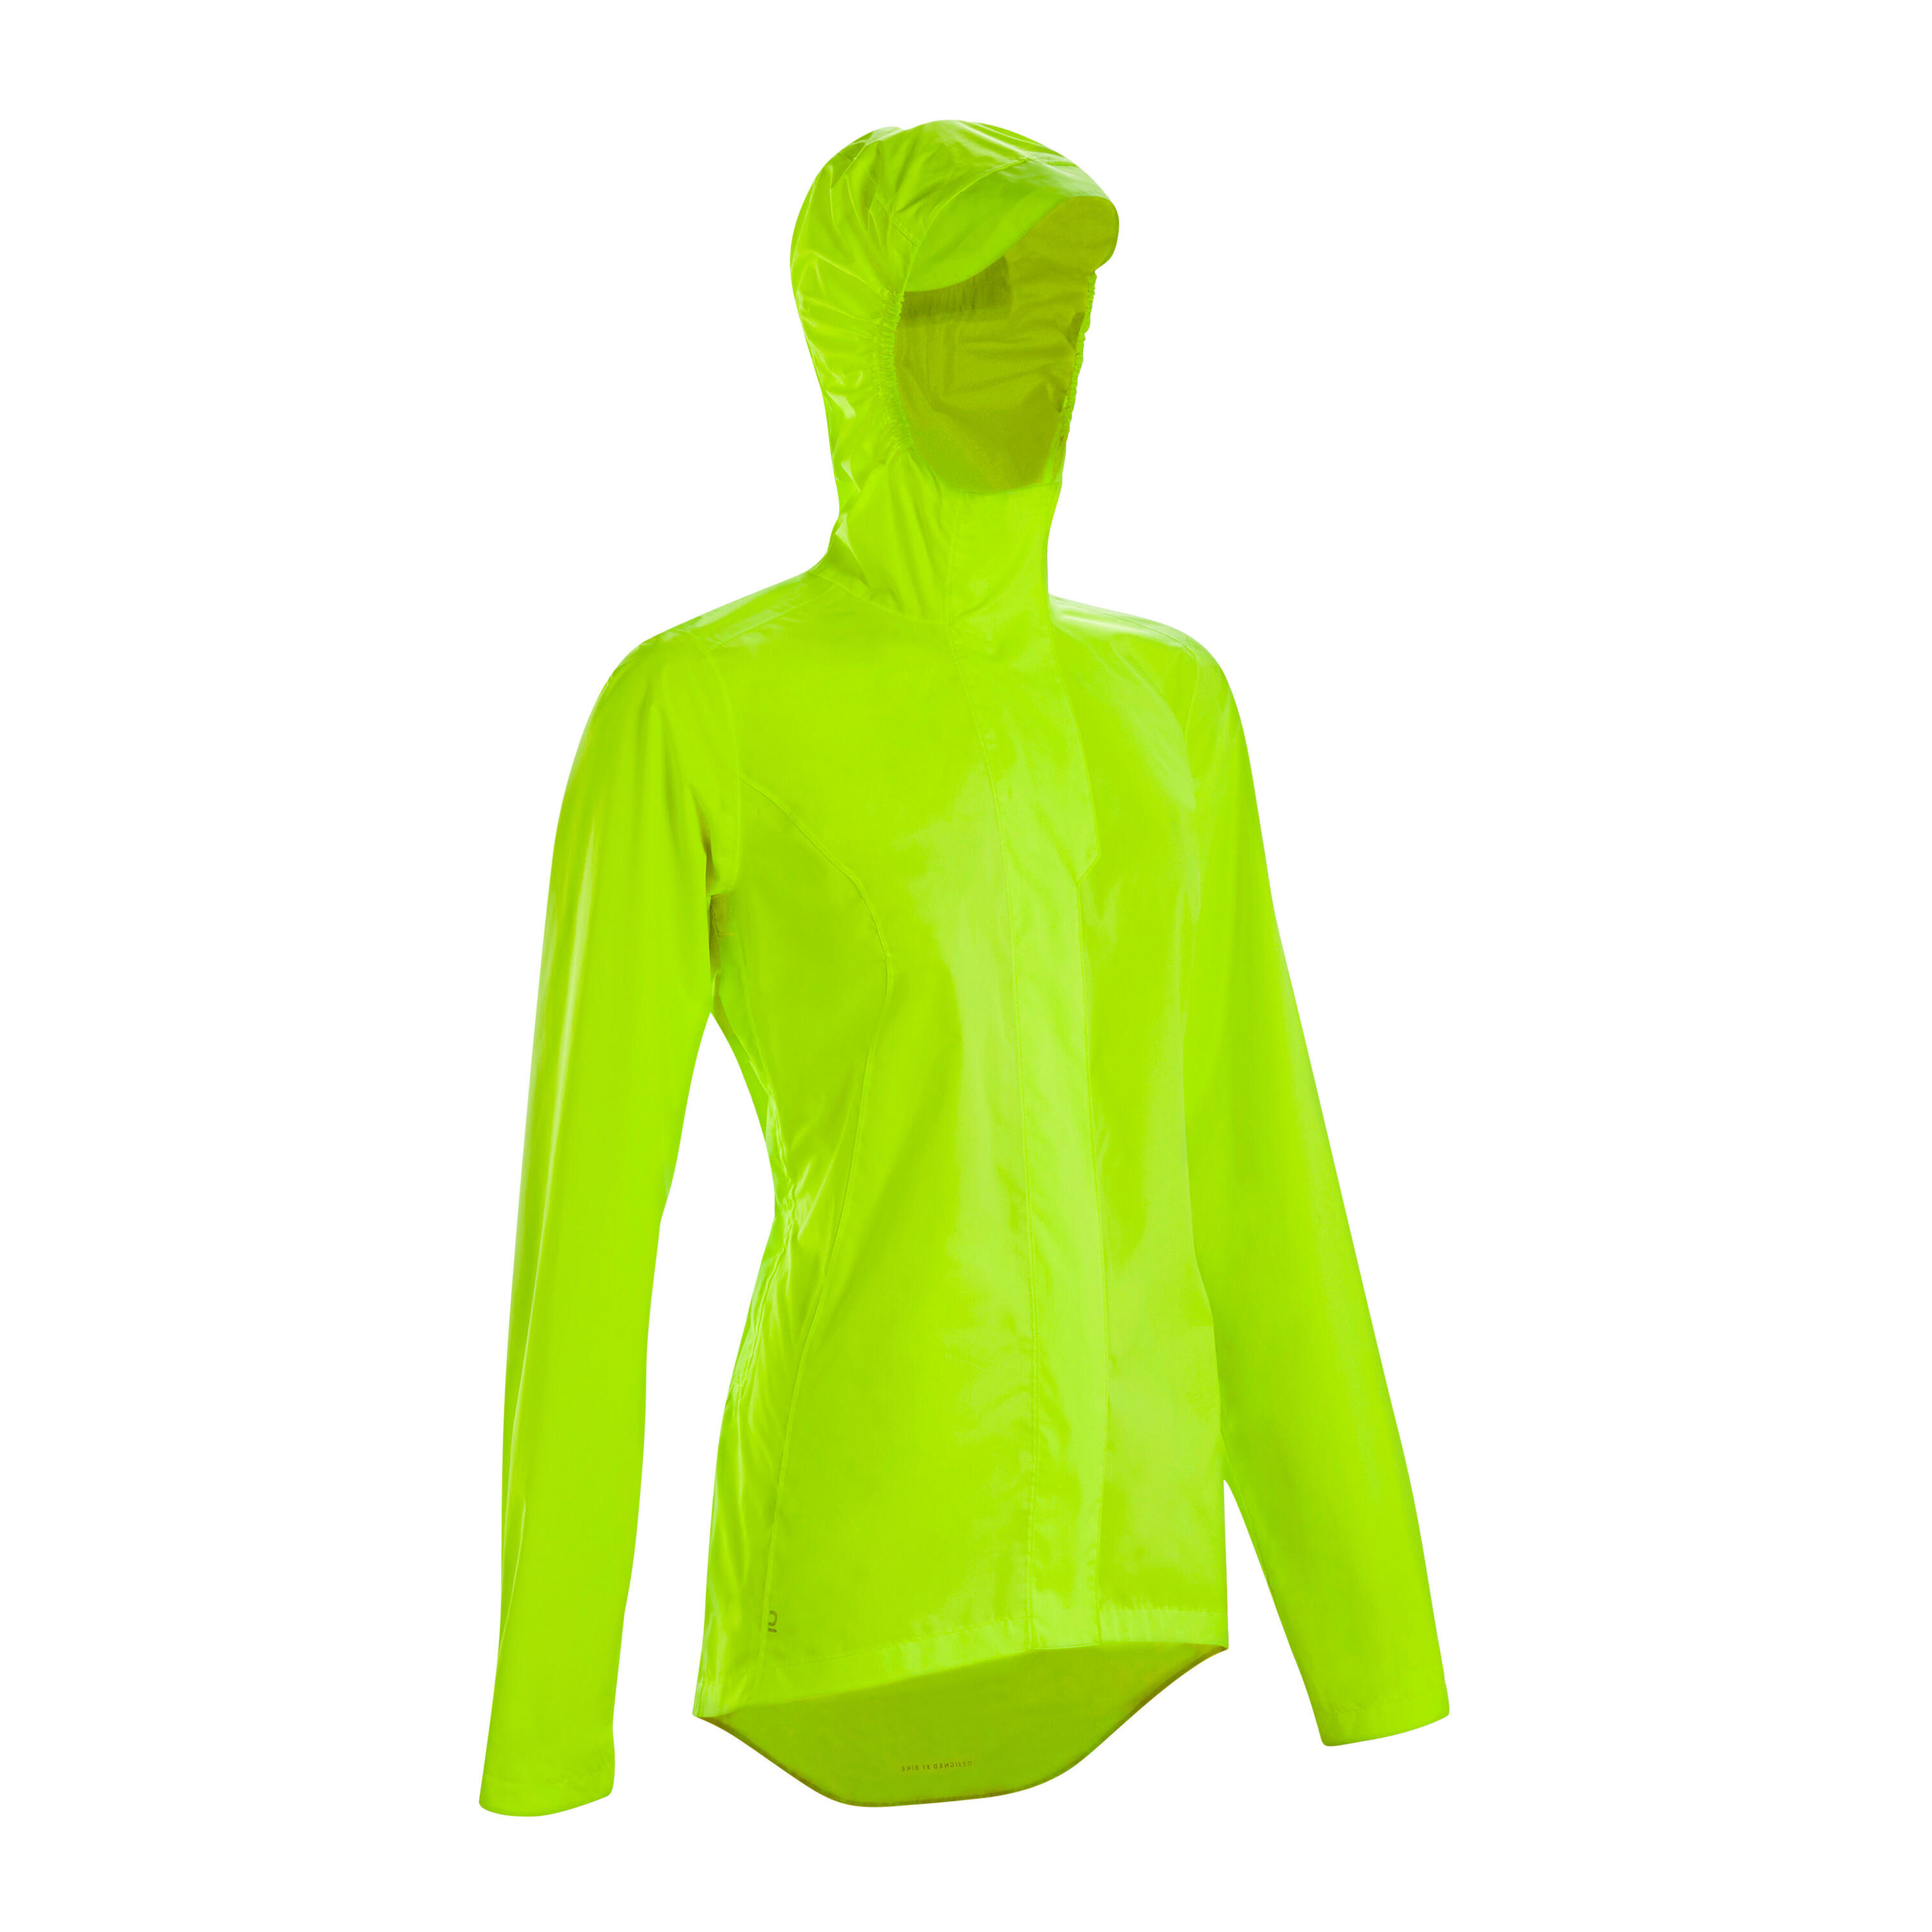 Women's Waterproof Urban Cycling Jacket - Neon Yellow 30/39